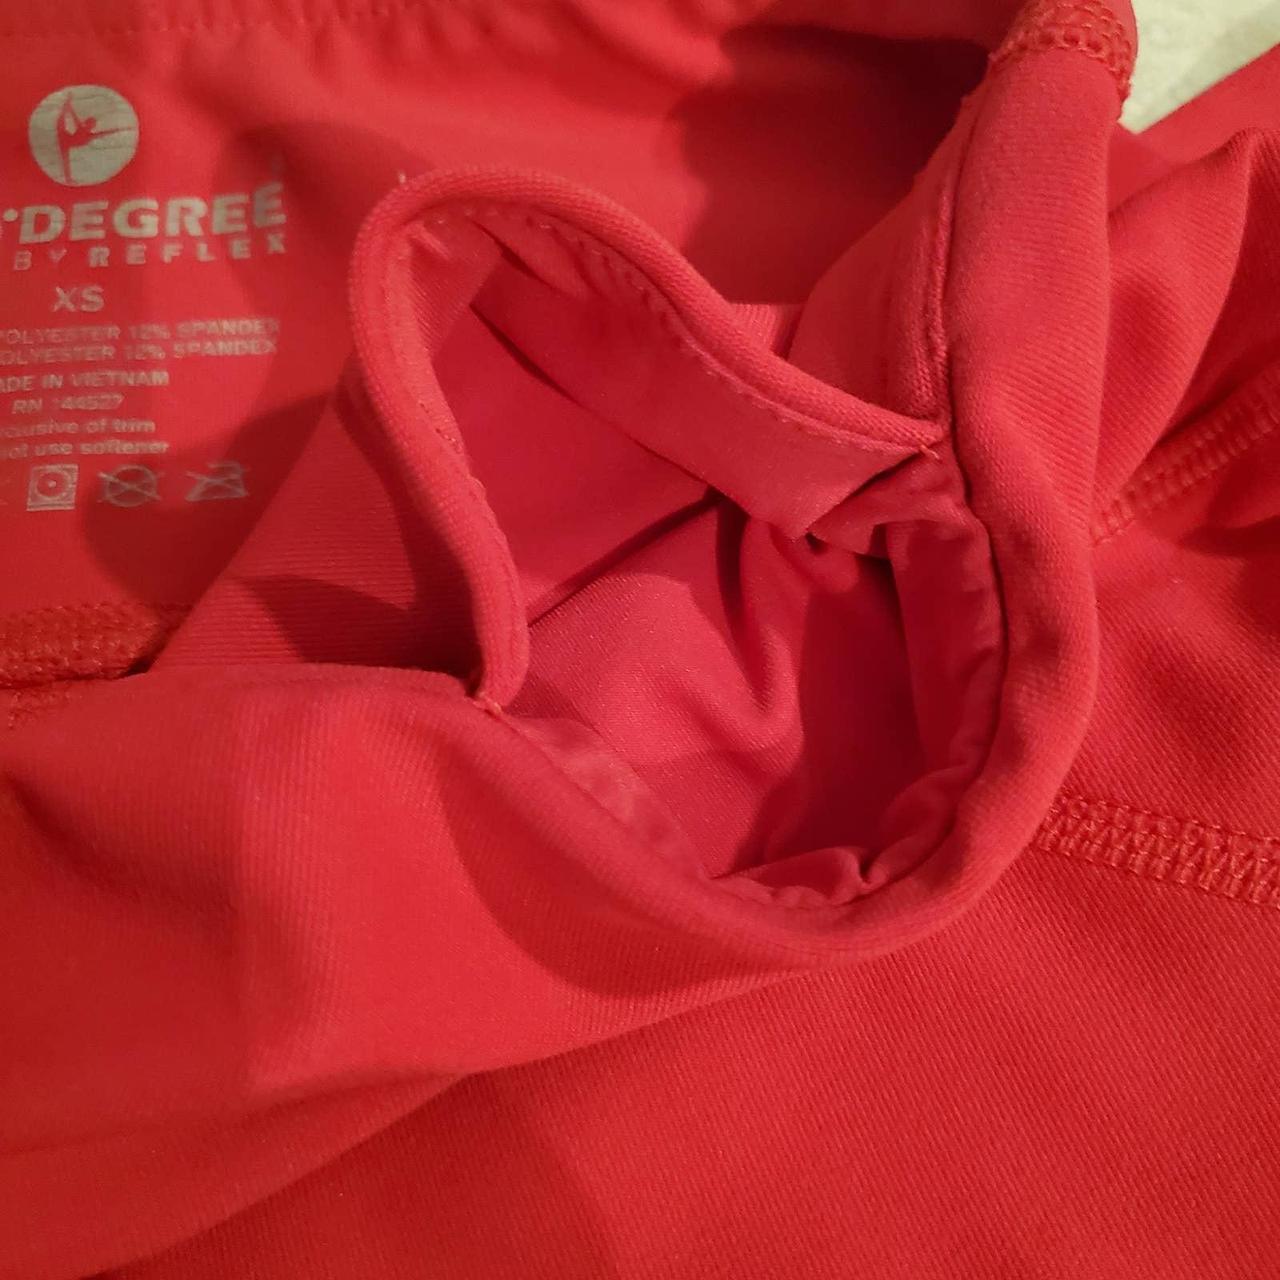 90 degree pink workout leggings with pockets - Depop